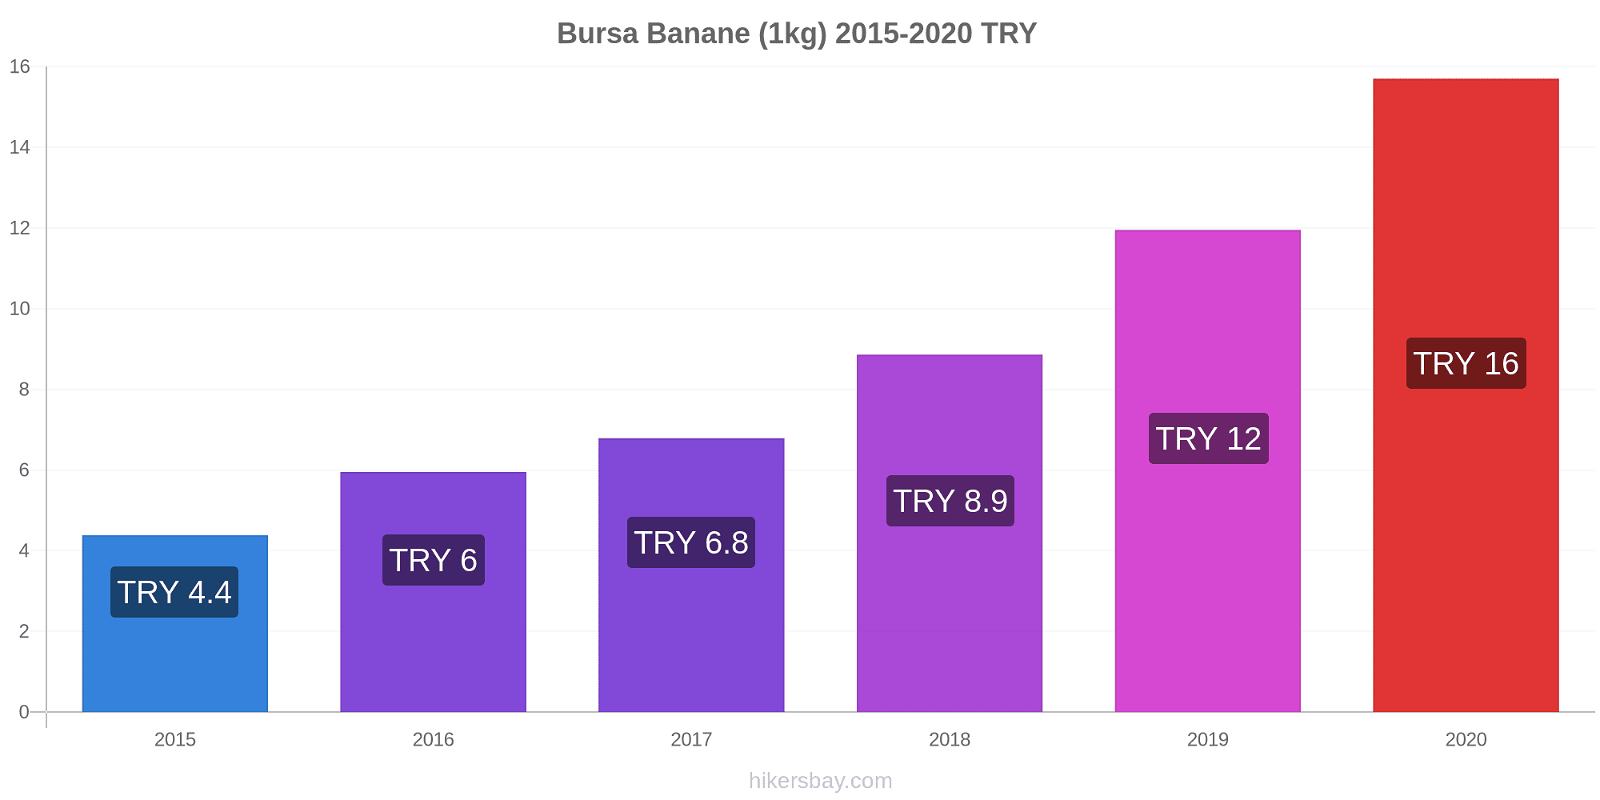 Bursa variazioni di prezzo Banana (1kg) hikersbay.com